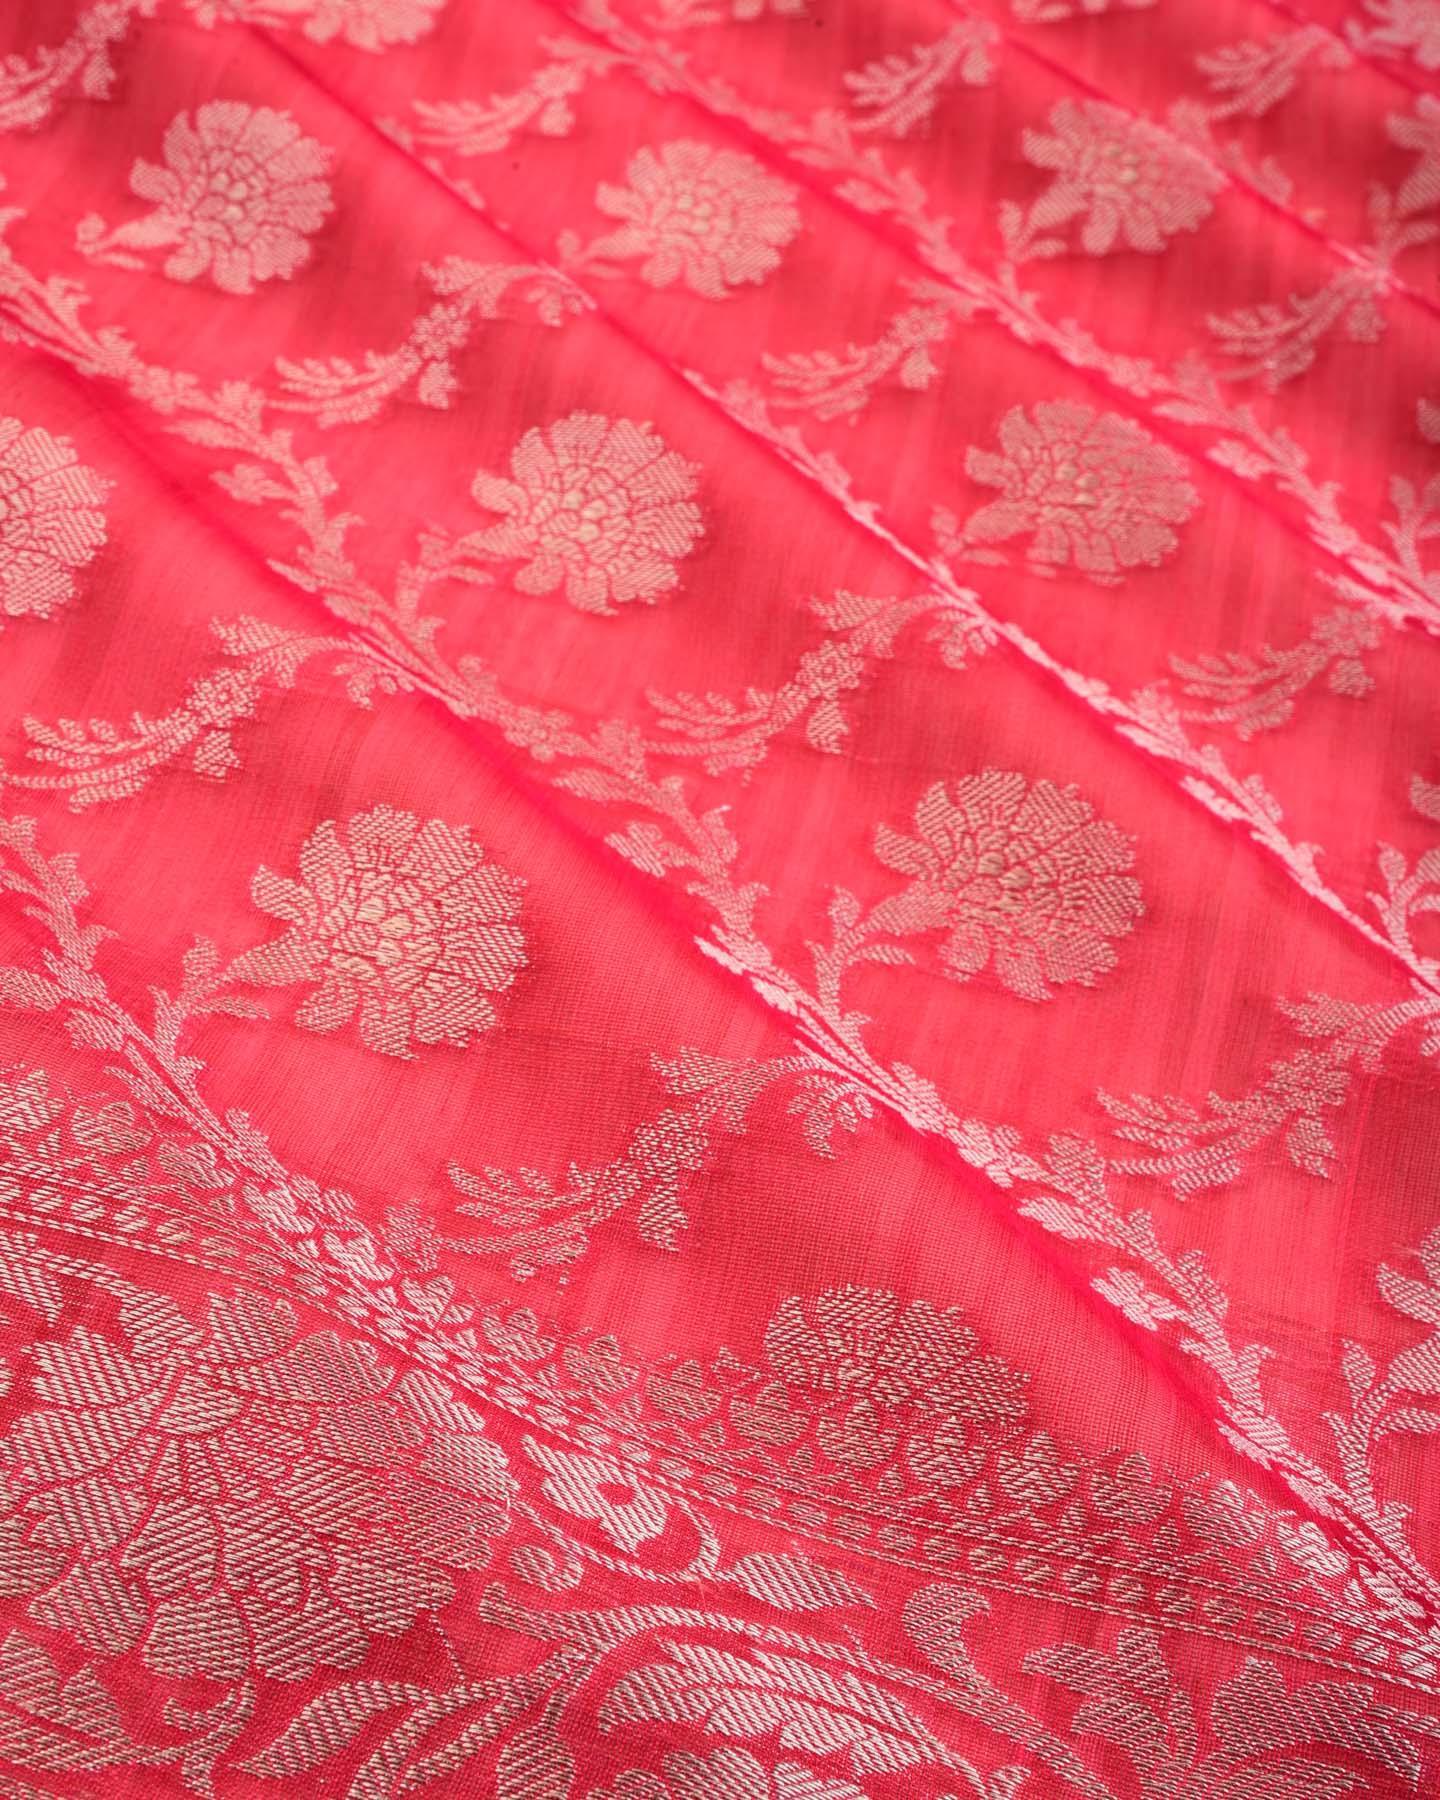 Textured Pink Banarasi Silver Zari Jaal Cutwork Brocade Woven Cotton Silk Saree - By HolyWeaves, Benares